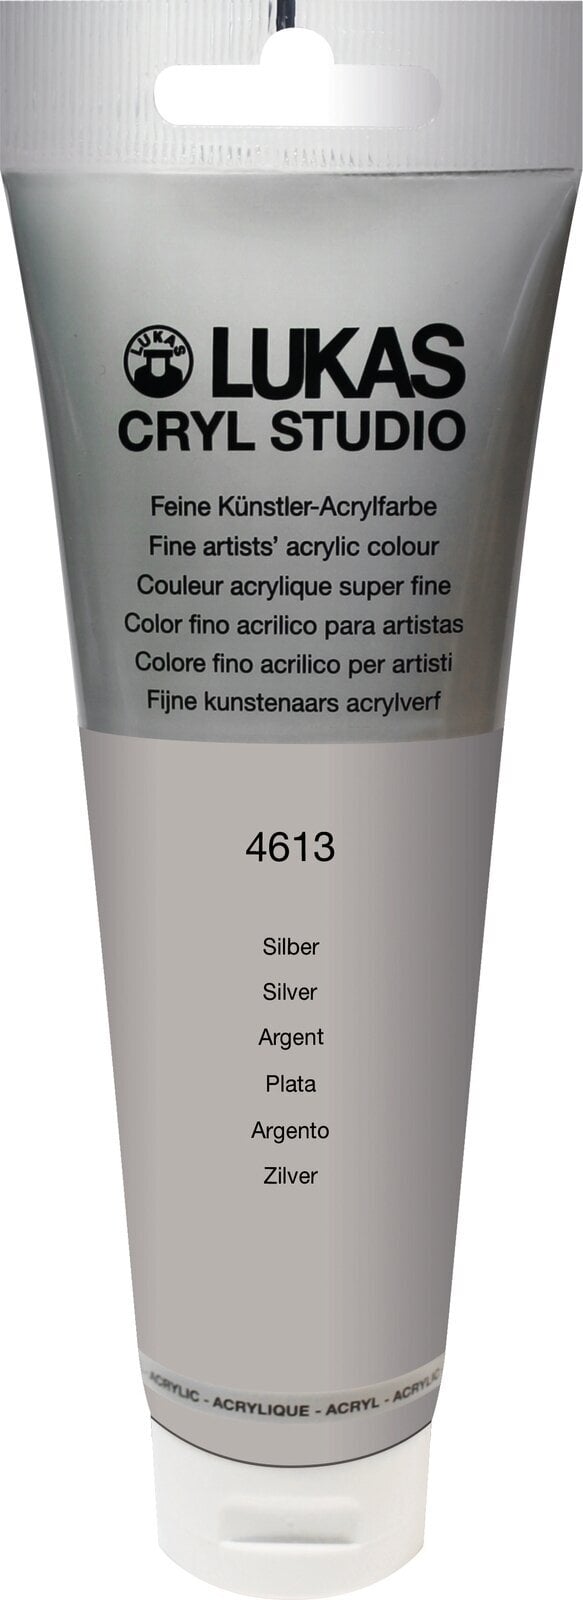 Acrylverf Lukas Cryl Studio Acrylic Paint Plastic Tube Acrylverf Silver 125 ml 1 stuk